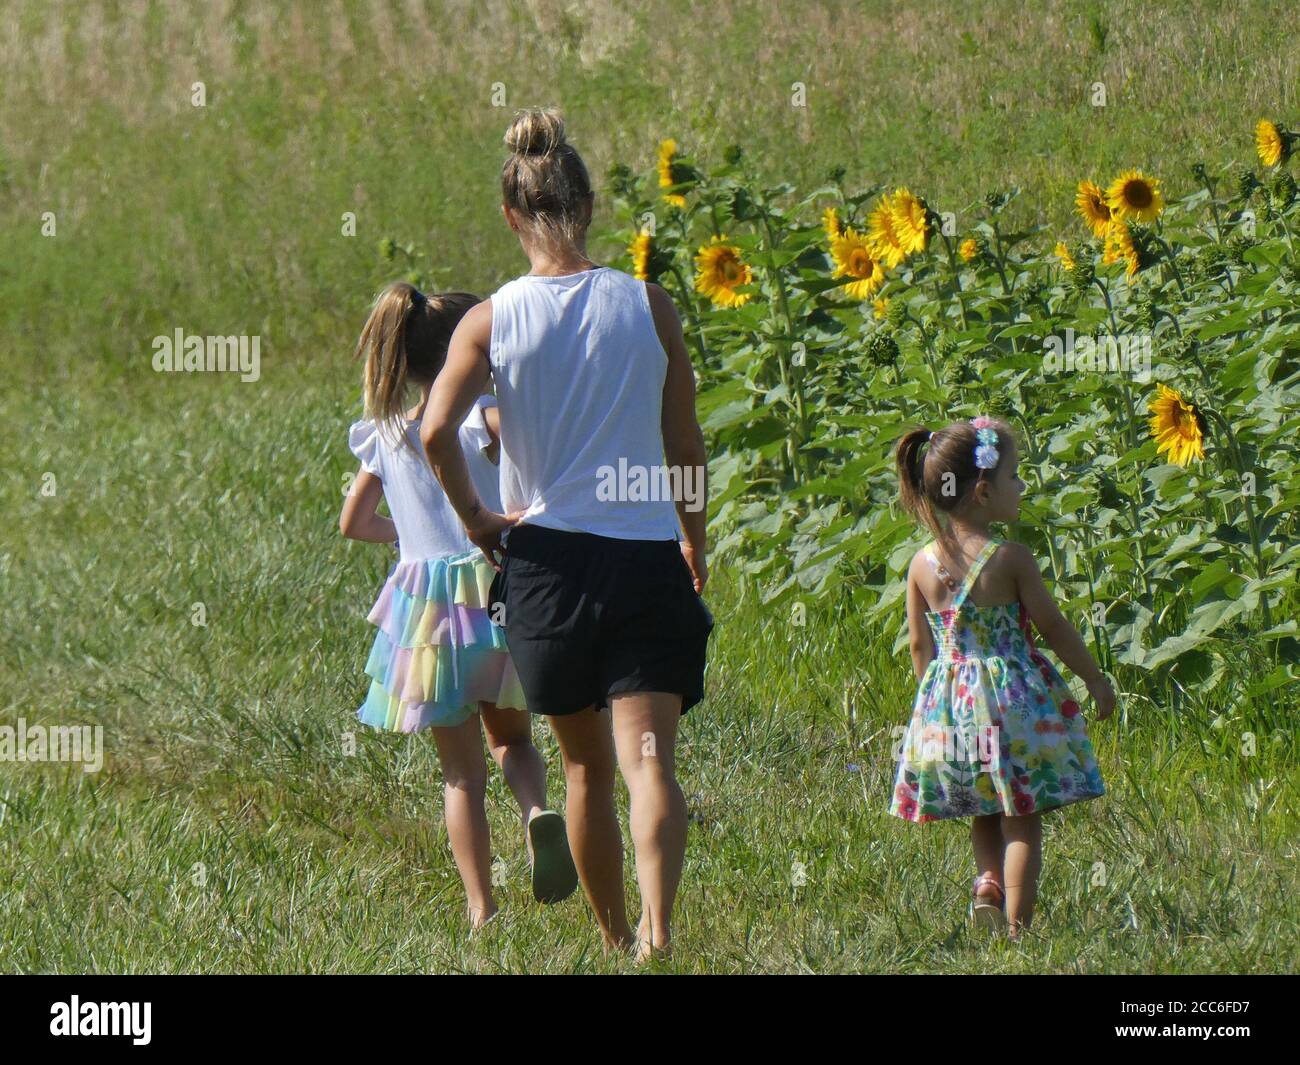 Visitors enjoying sunflower patch. Stock Photo